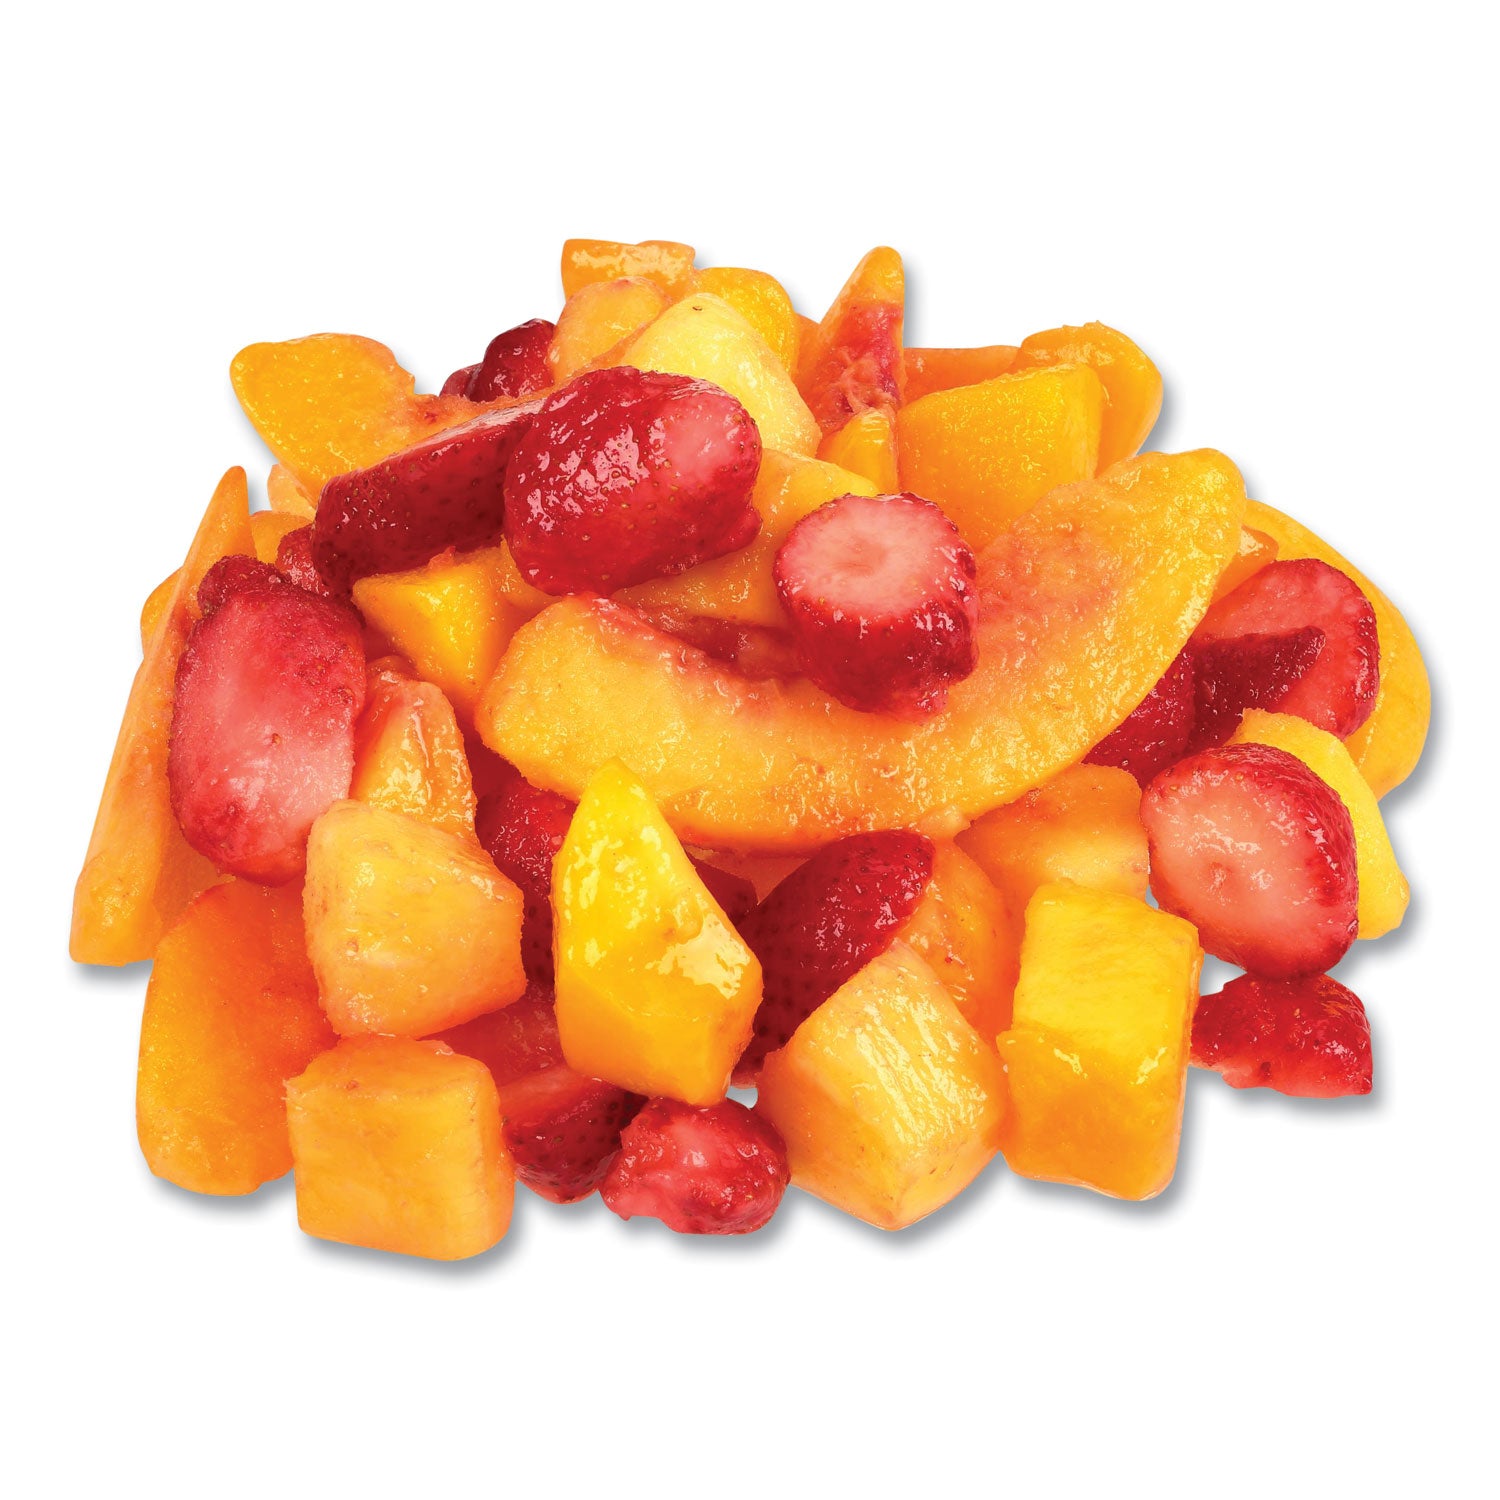 frozen-mixed-fruit-5-lb-bag-ships-in-1-3-business-days_grr90300157 - 2